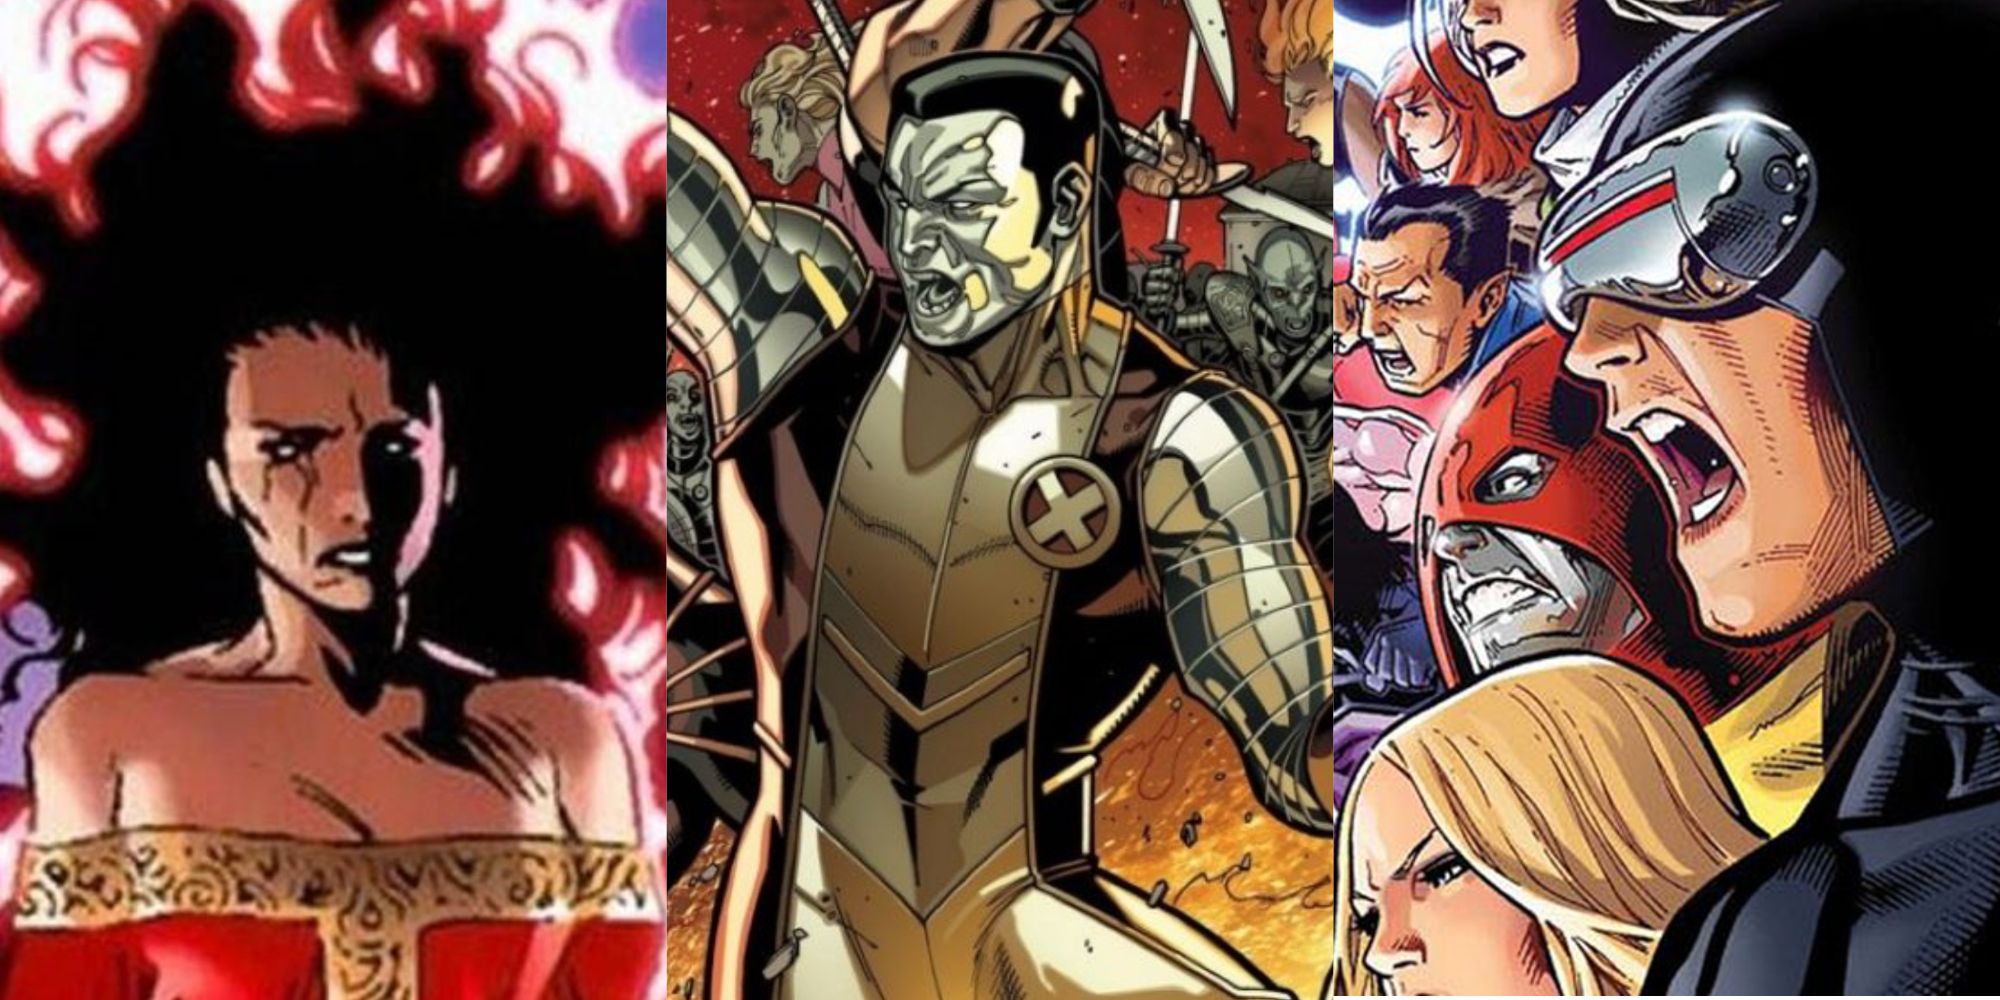 A split image of art from popular X-men comic runs.